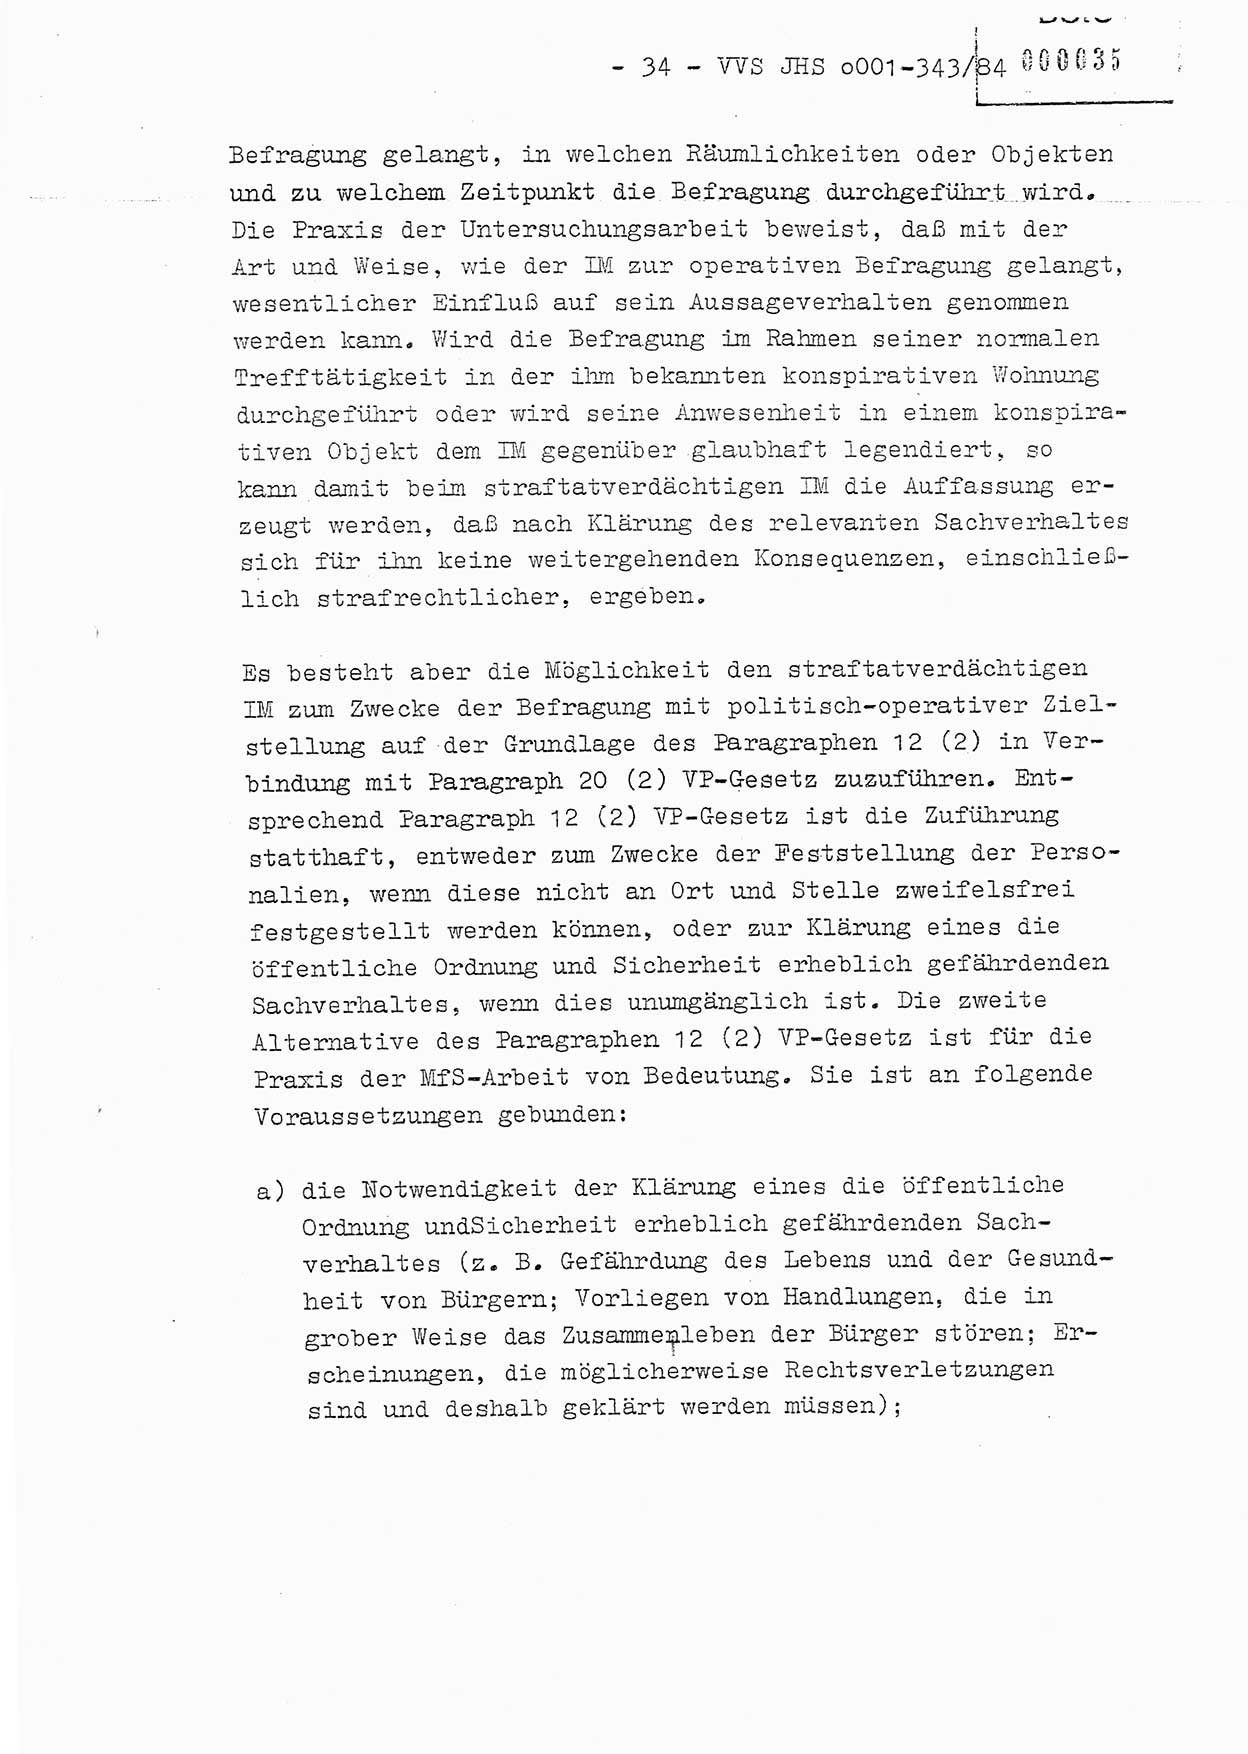 Diplomarbeit, Oberleutnant Bernd Michael (HA Ⅸ/5), Oberleutnant Peter Felber (HA IX/5), Ministerium für Staatssicherheit (MfS) [Deutsche Demokratische Republik (DDR)], Juristische Hochschule (JHS), Vertrauliche Verschlußsache (VVS) o001-343/84, Potsdam 1985, Seite 34 (Dipl.-Arb. MfS DDR JHS VVS o001-343/84 1985, S. 34)